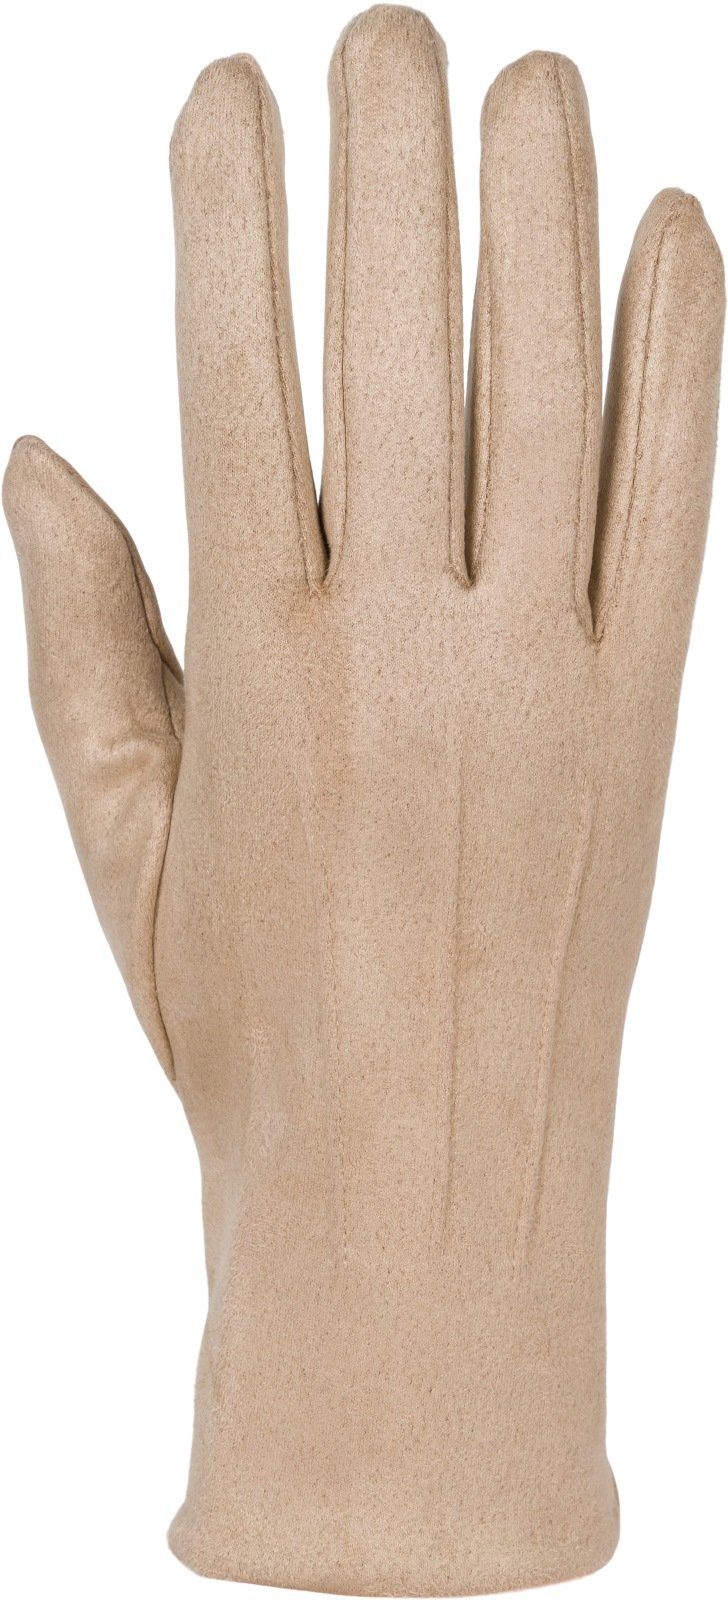 styleBREAKER Ziernähte Fleecehandschuhe Einfarbige Handschuhe Touchscreen Beige